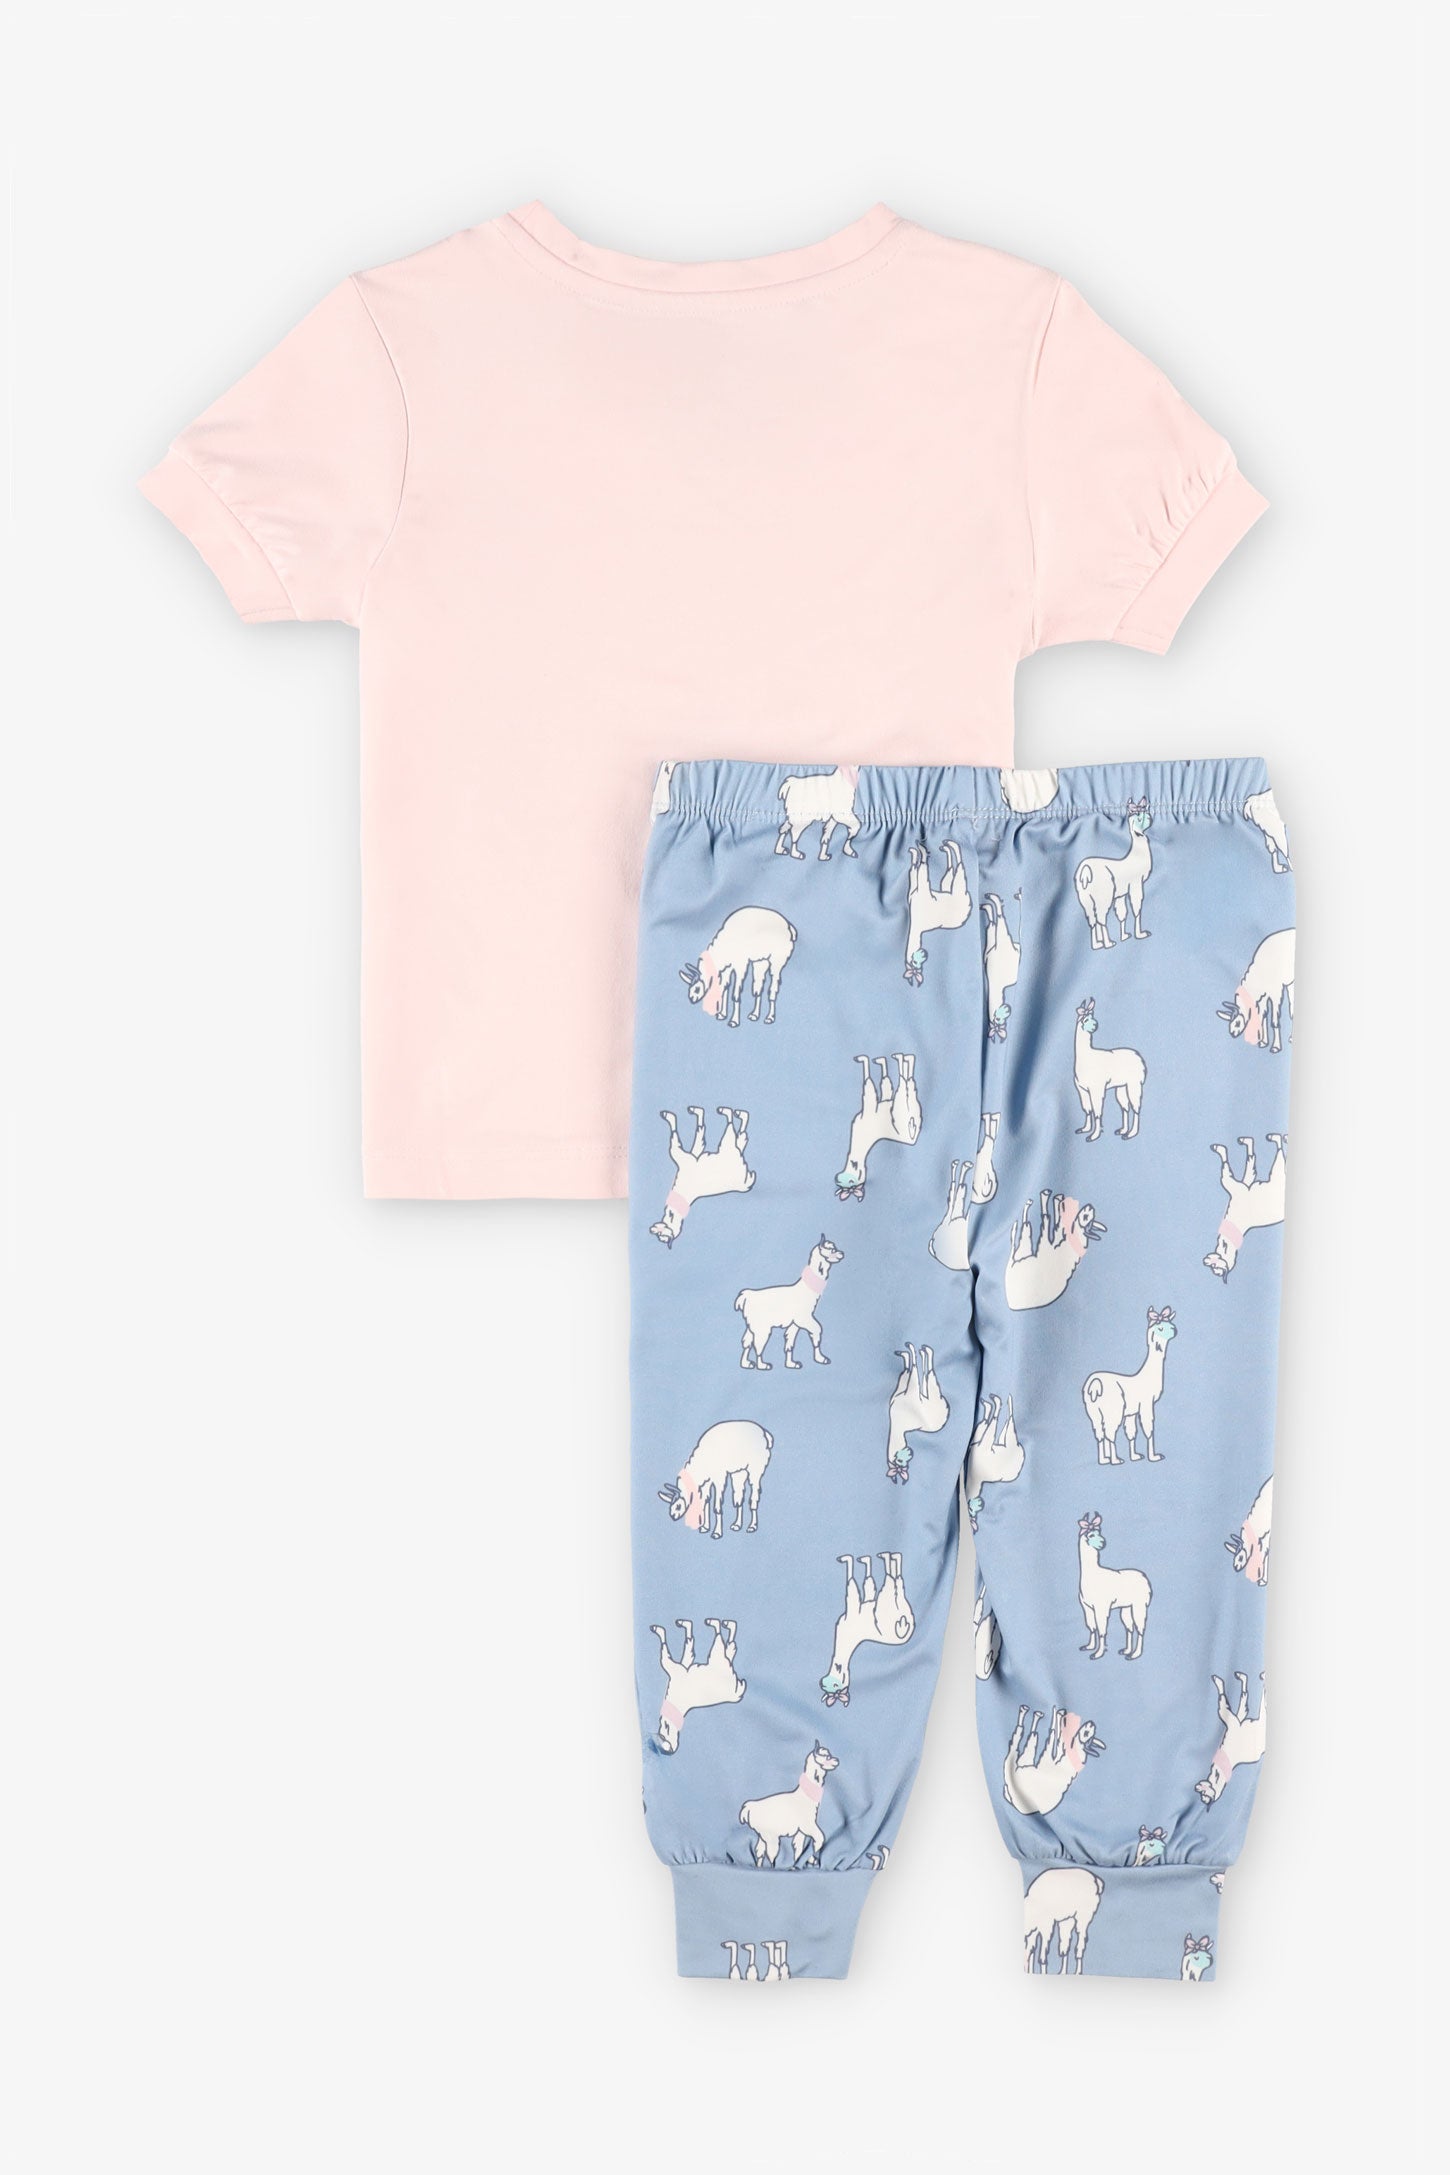 Pyjama 2-pièces Moss assorti famille, 2/35$ - Enfant fille && ROSE PALE